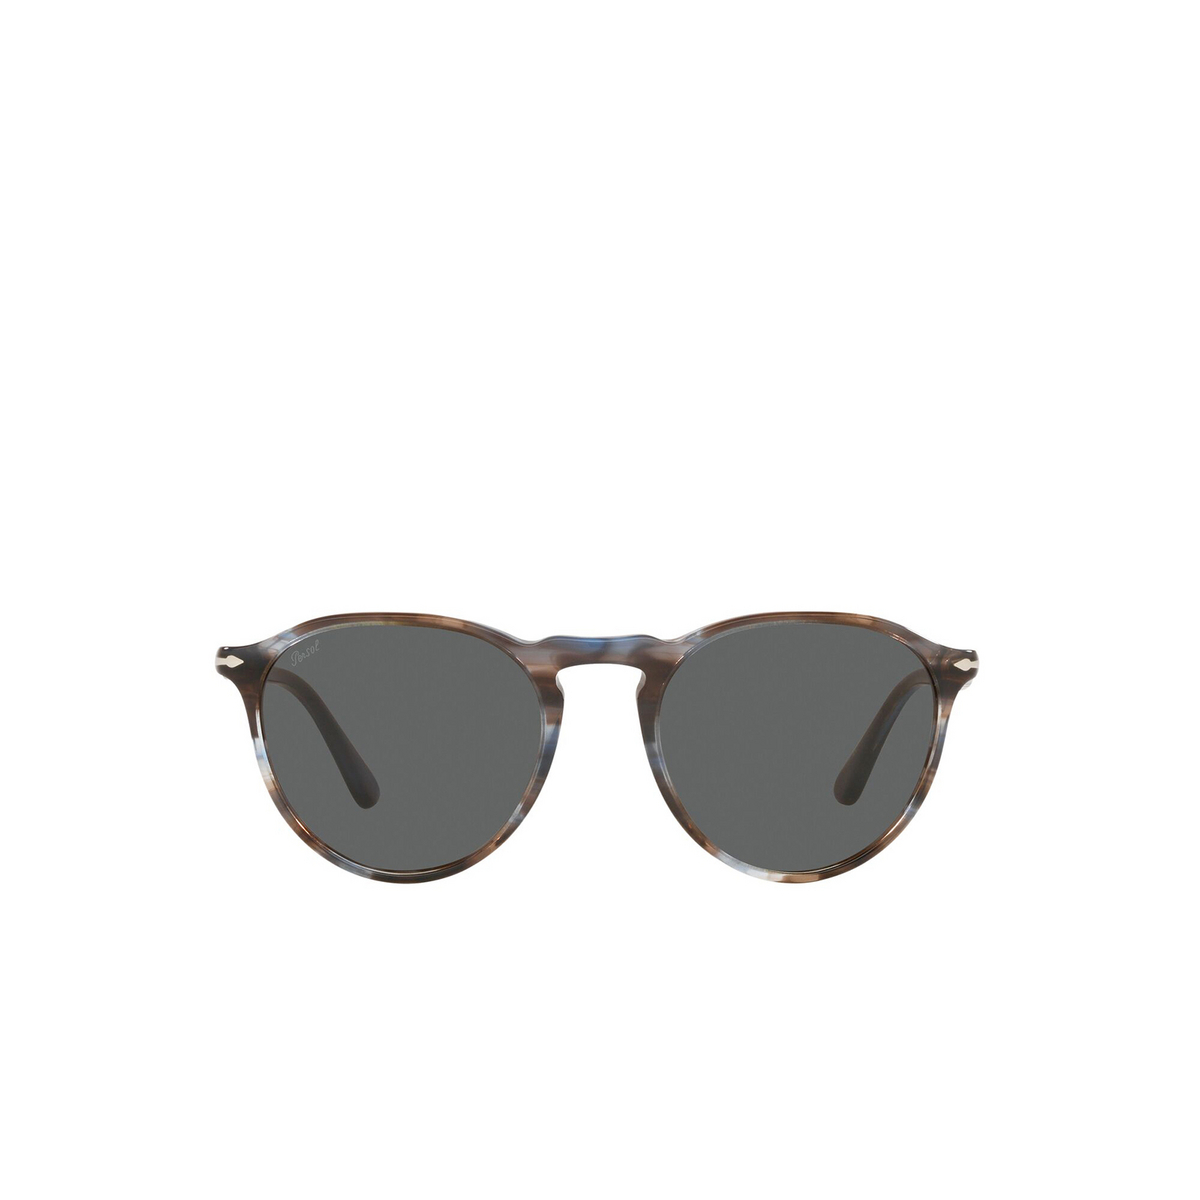 Persol® Round Sunglasses: PO3286S color Striped Blue 1155B1 - front view.